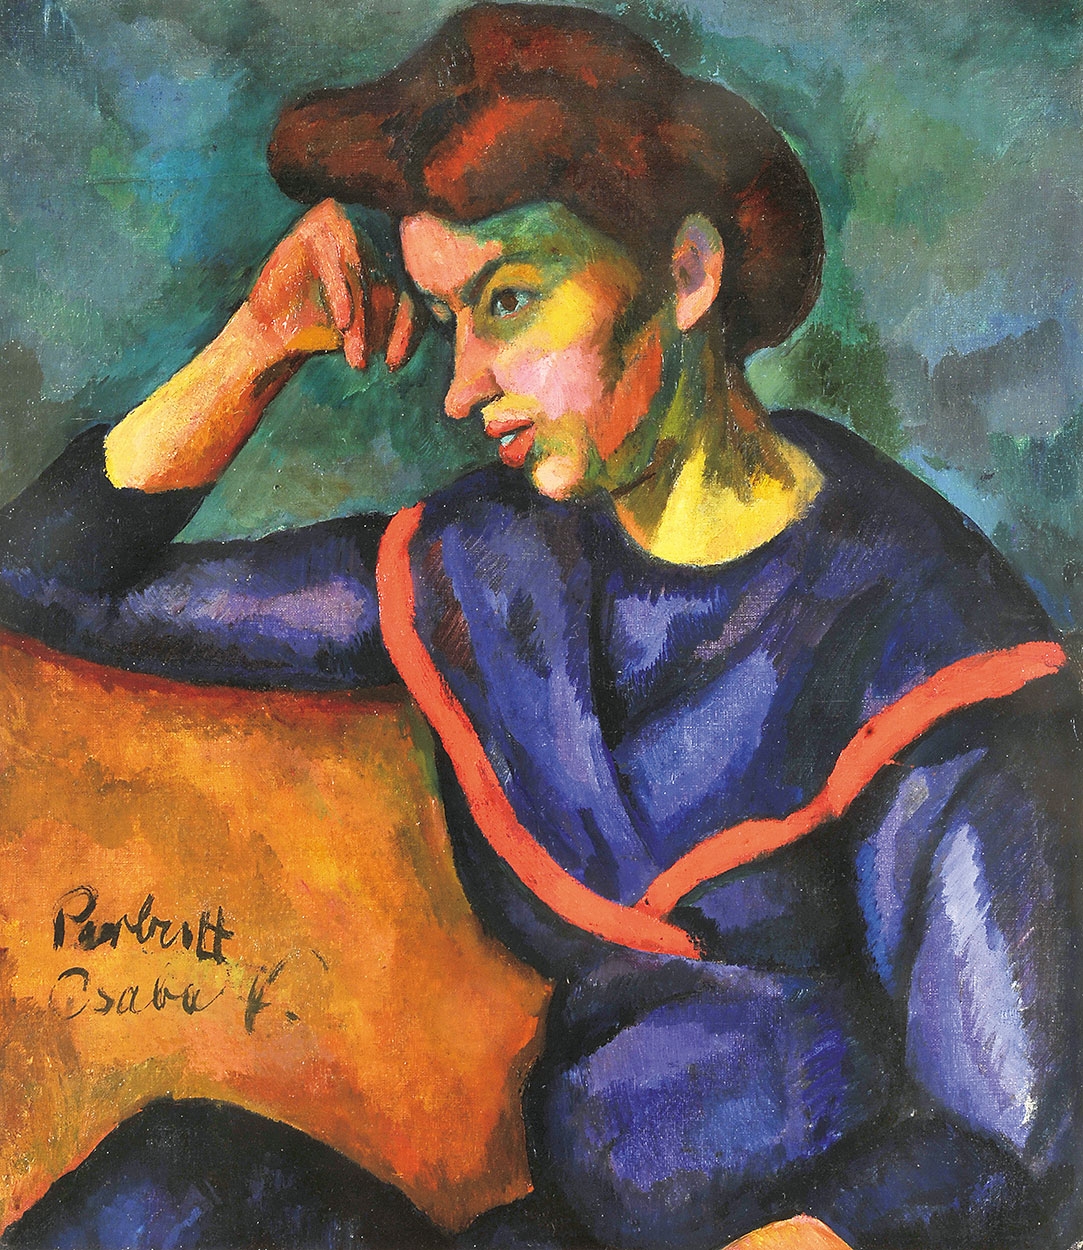 Perlrott-Csaba Vilmos (1880-1955) Woman with red hair, around 1909